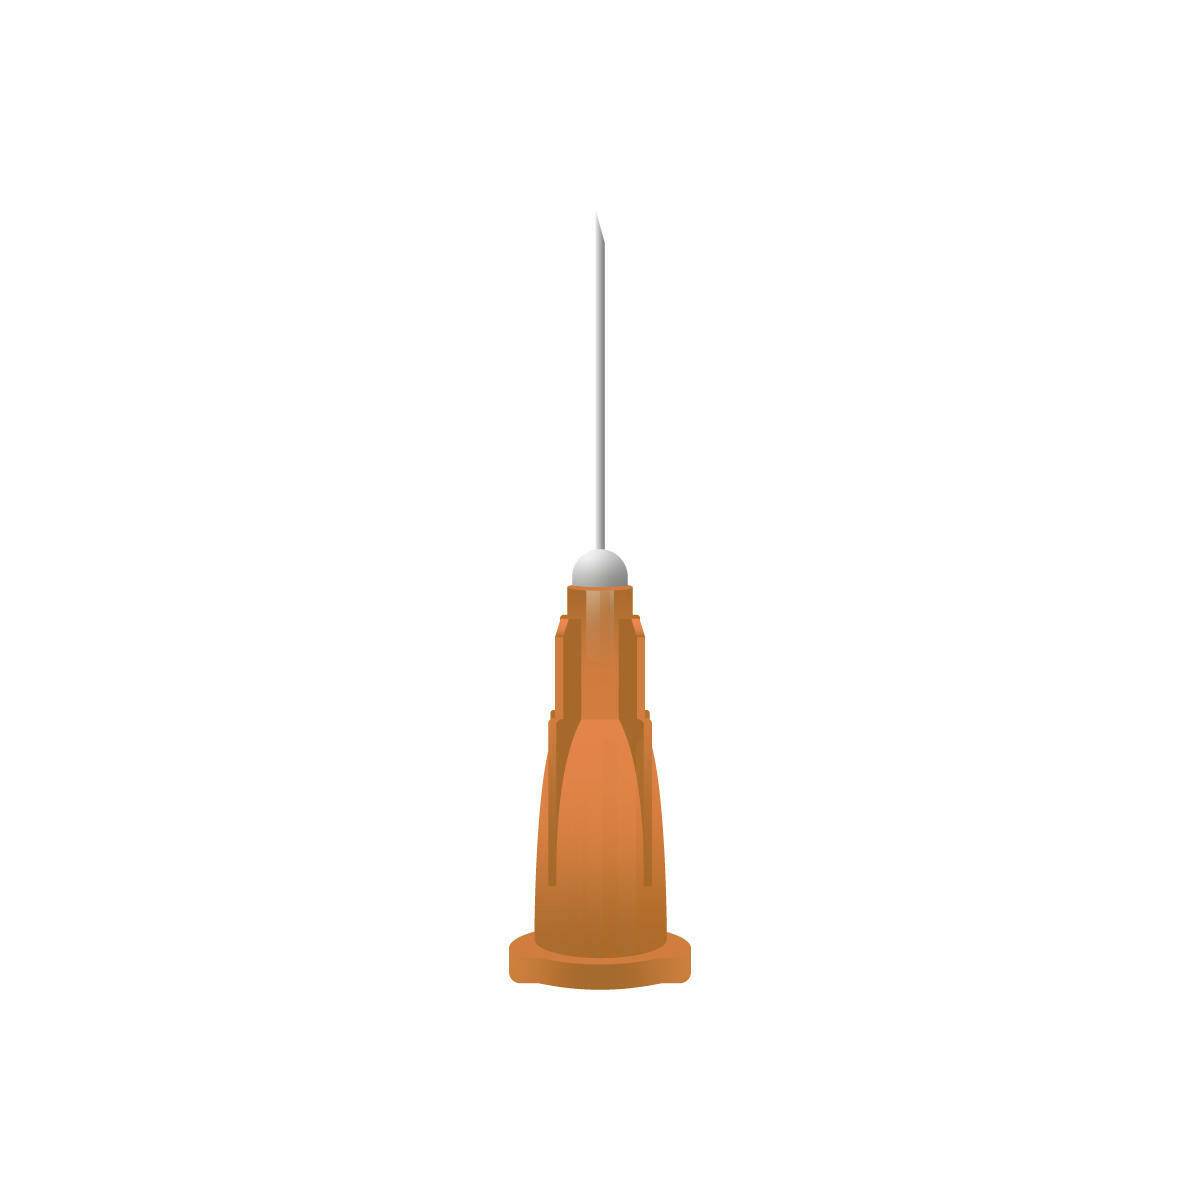 25g 5/8 inch Orange Dispovet Veterinary Needles (0.5 x 16mm) - UKMEDI